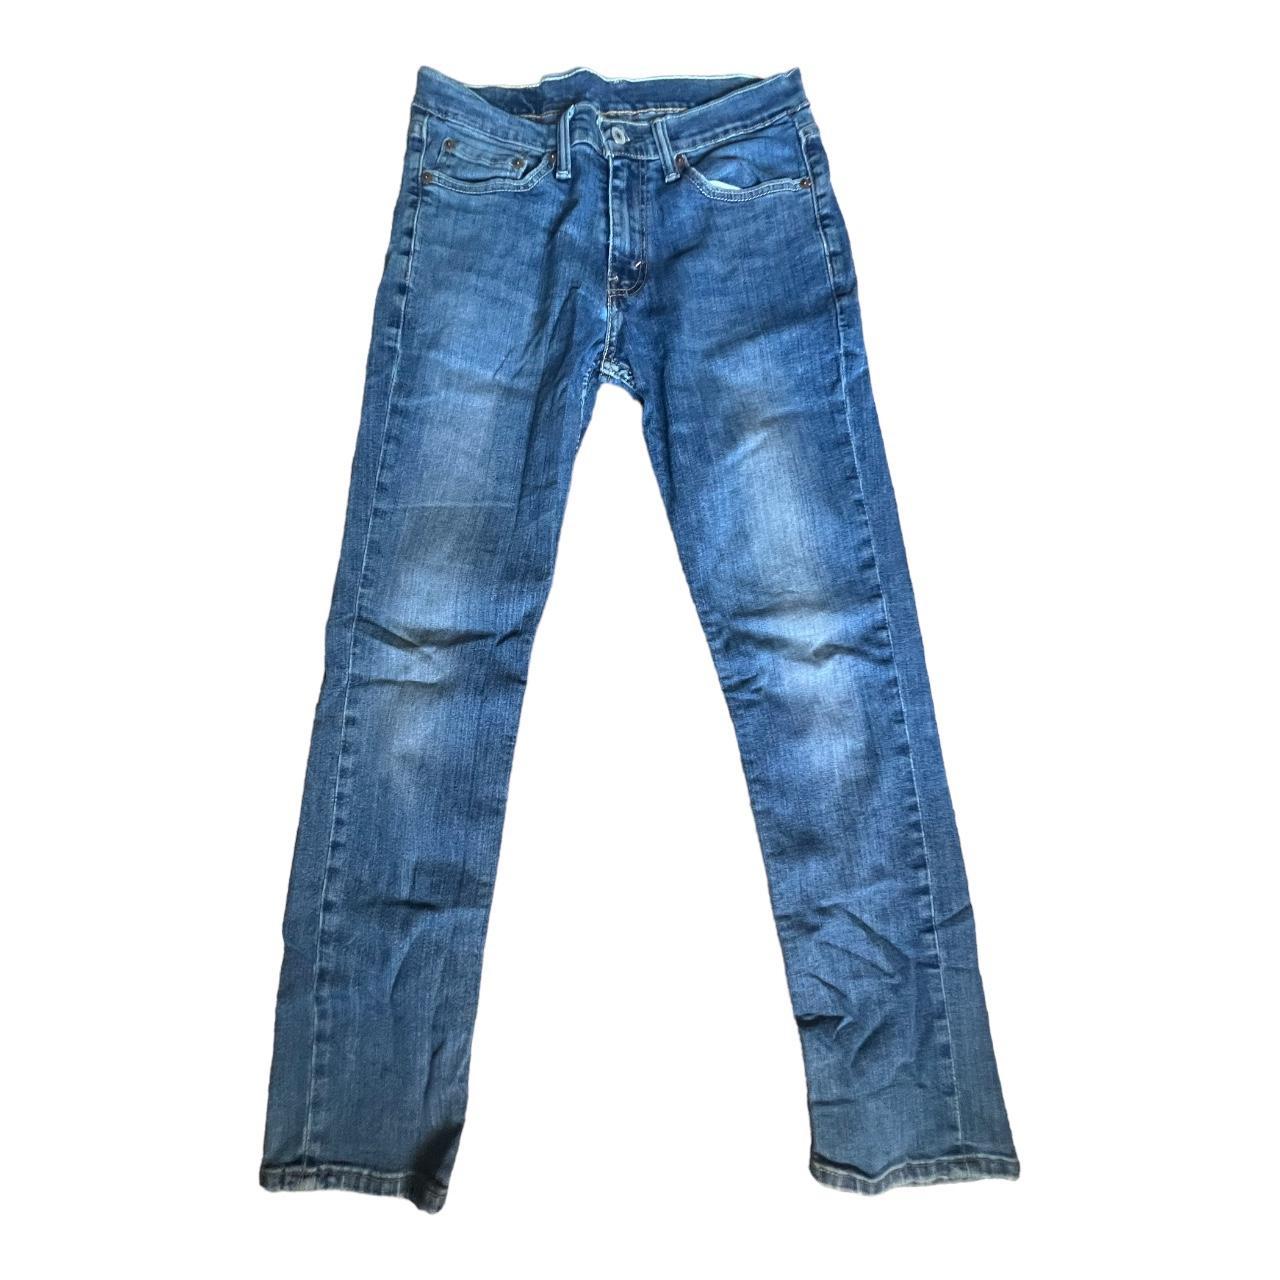 levi 511 denim jeans size 30x32 slim/skinny fit no... - Depop